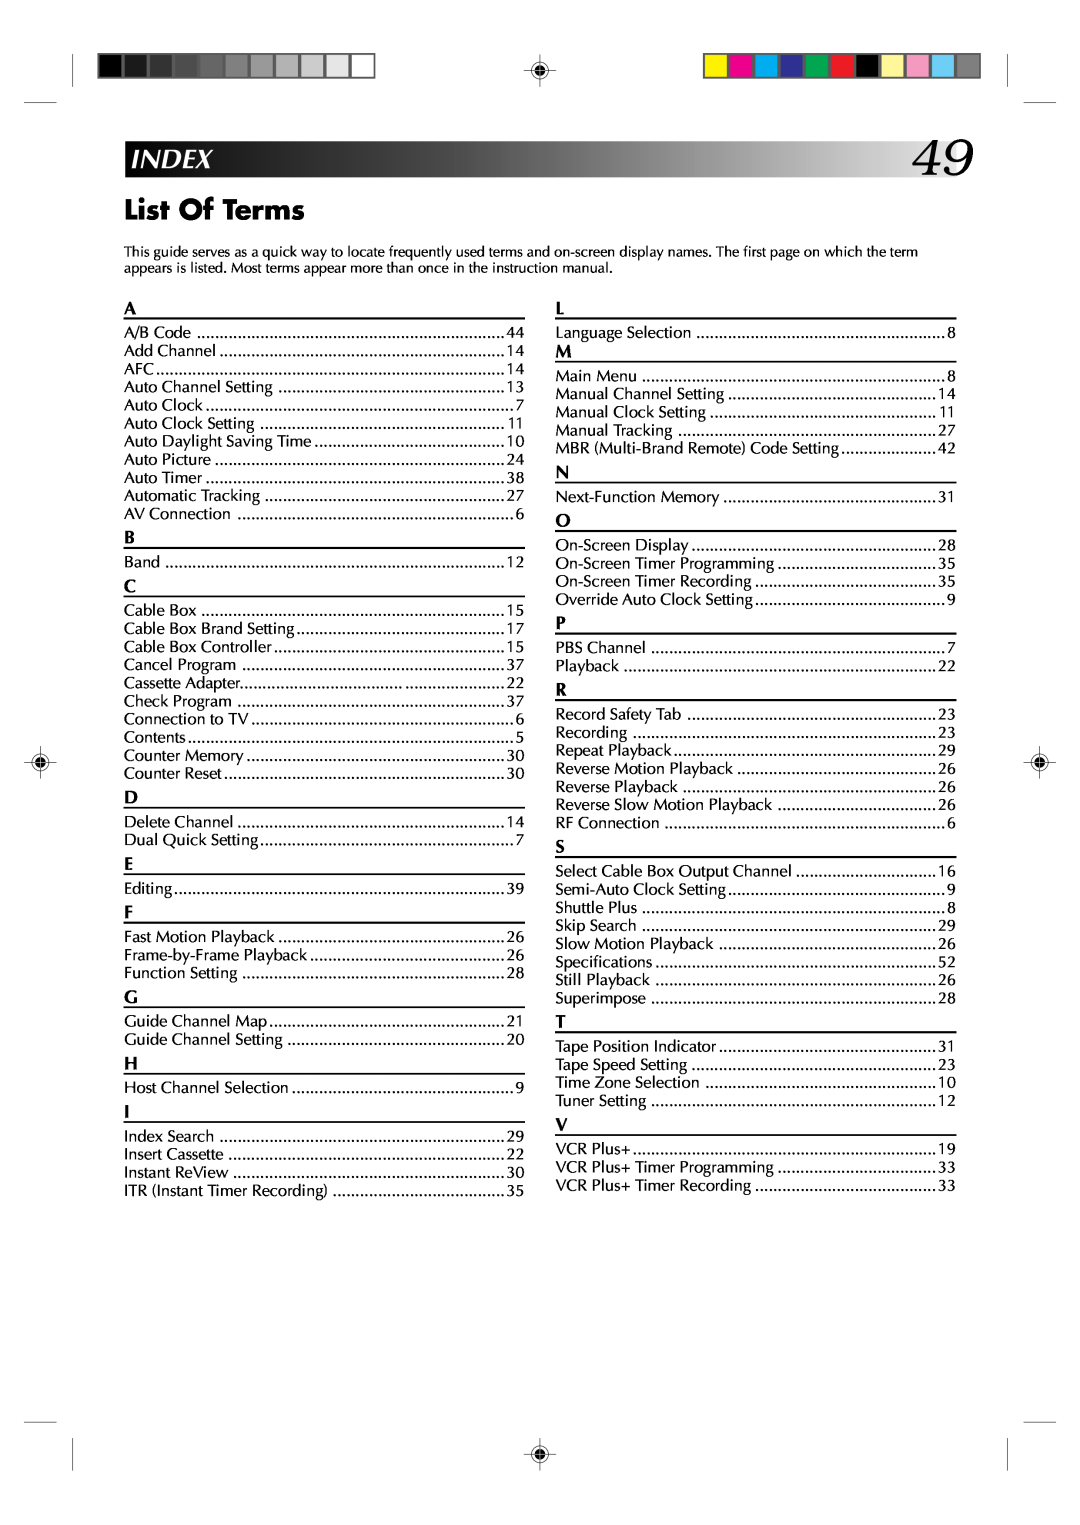 JVC HR-VP434U manual Index, List Of Terms 